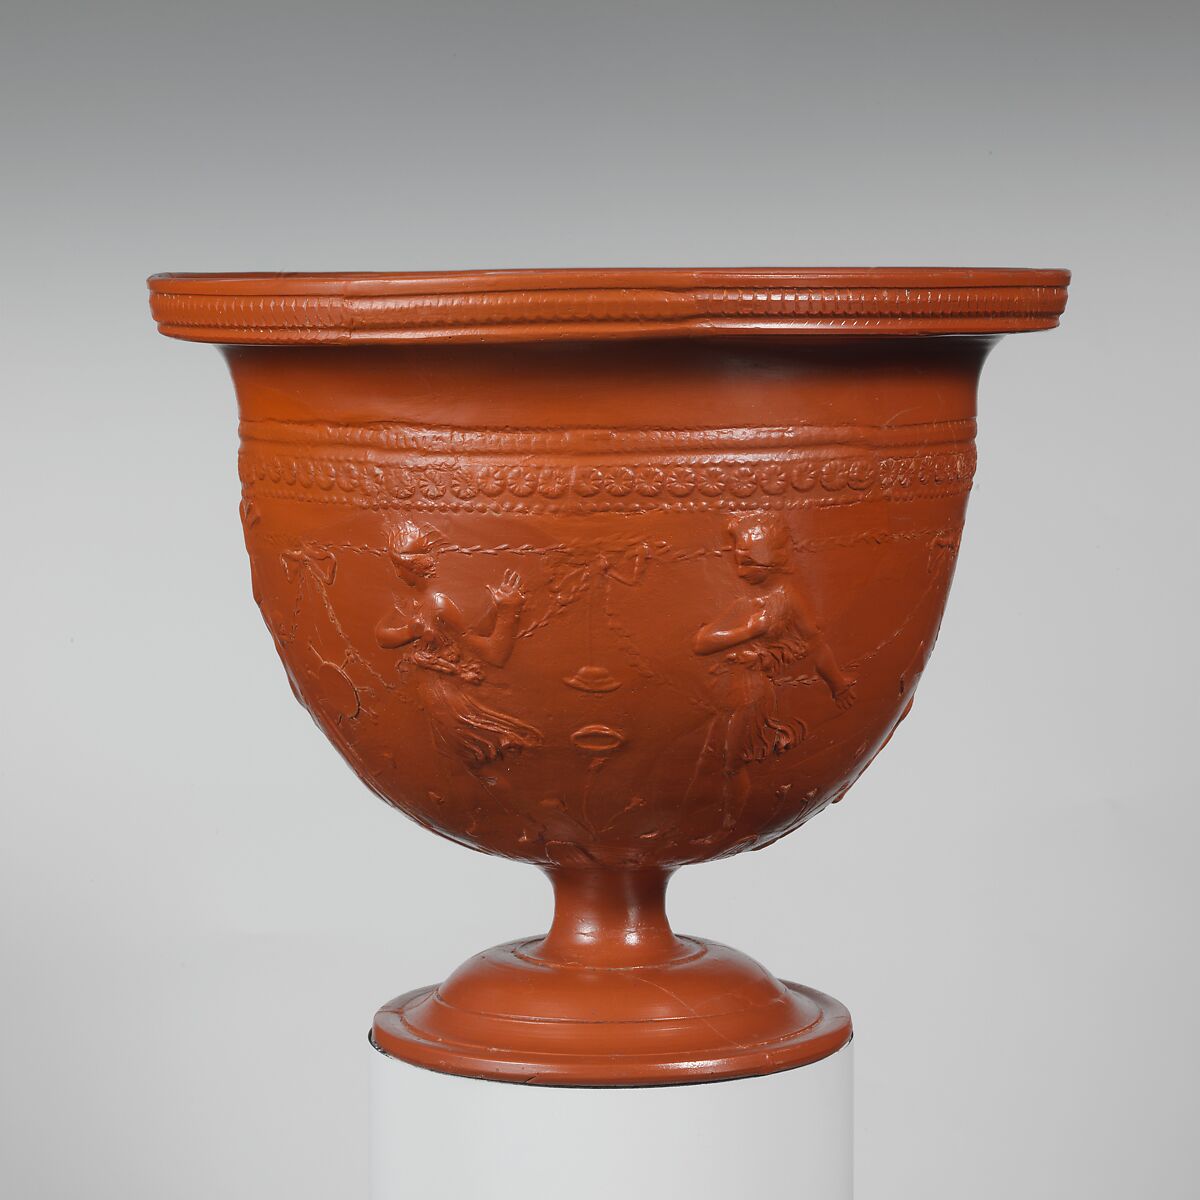 Terracotta bowl, Signed by Perennius Tigranus as owner, Terracotta, Roman 